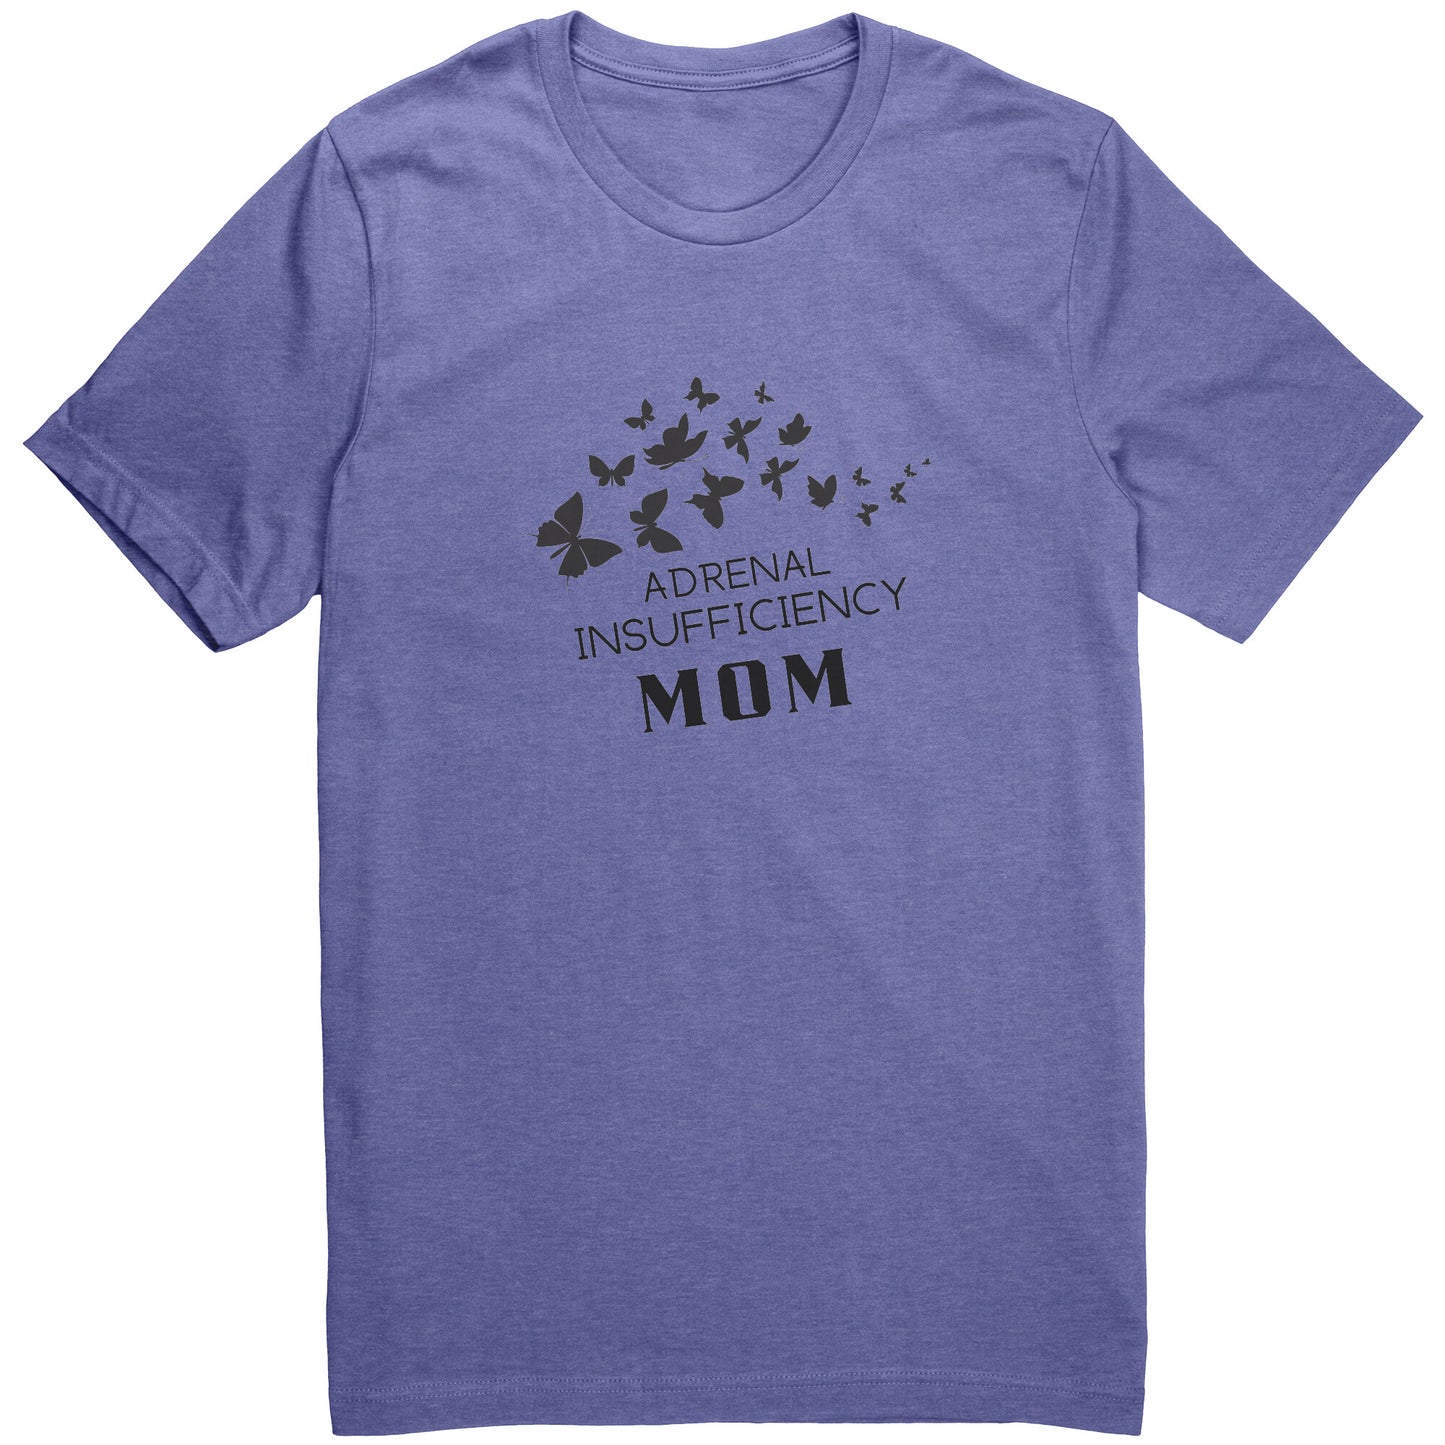 Adrenal Insufficiency Mom T-Shirt